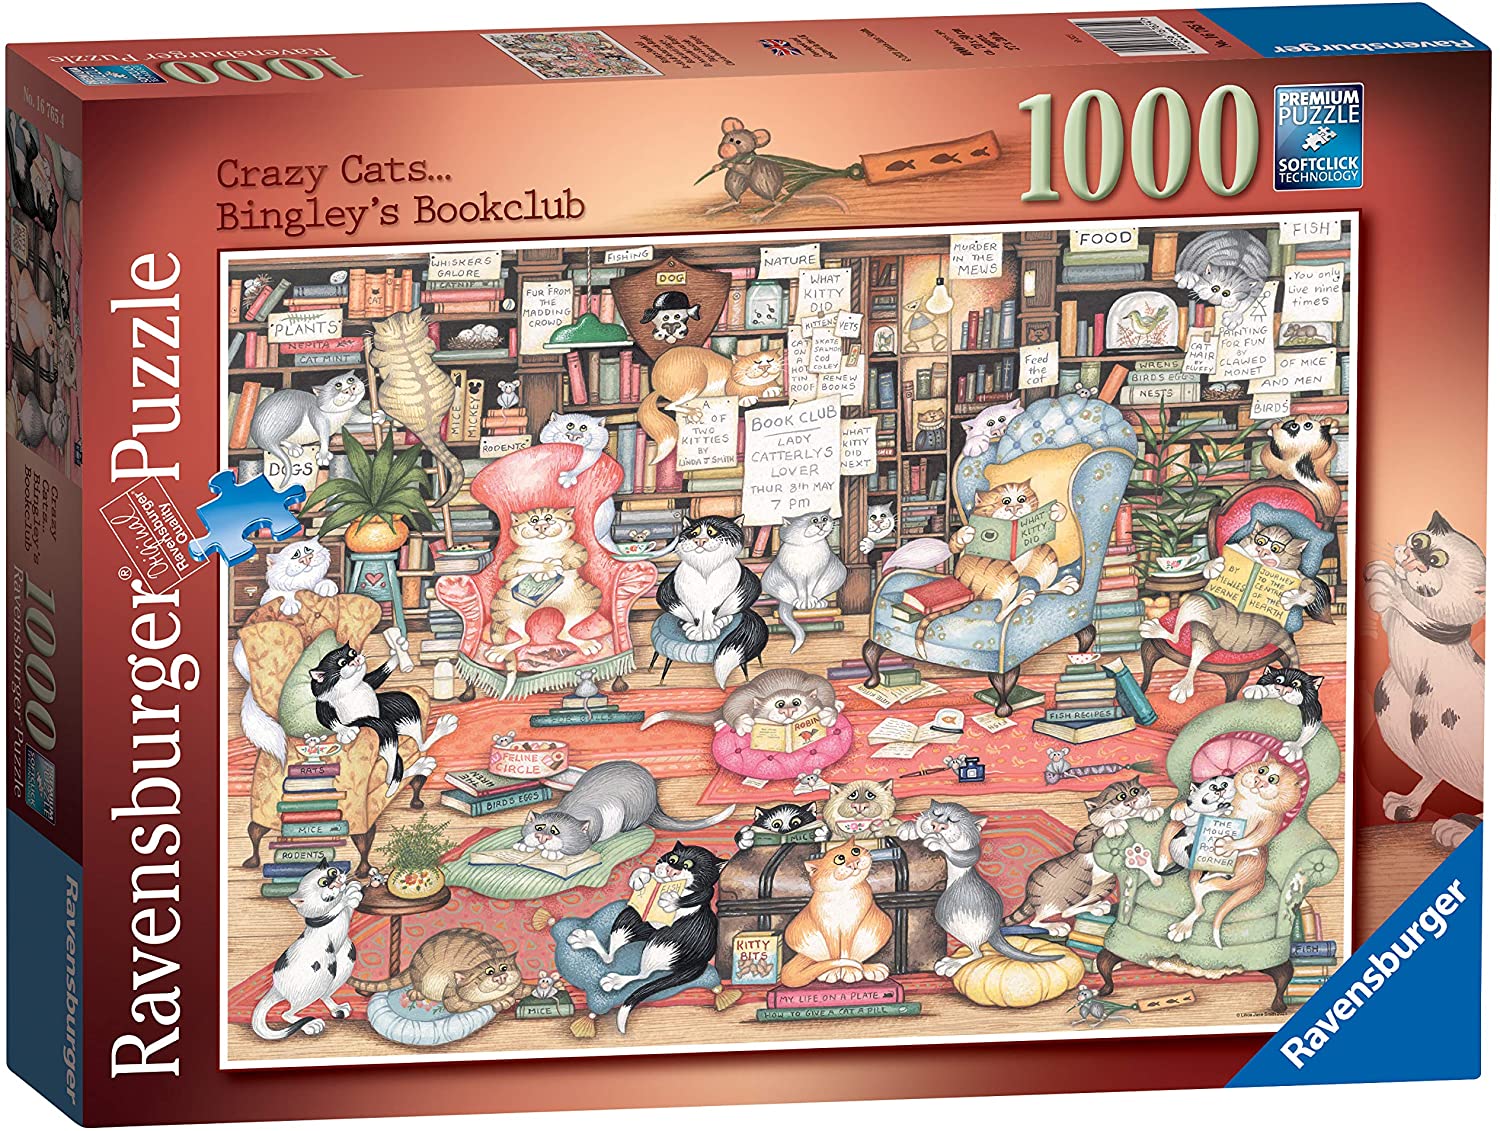 Crazy Cats Bookclub 1000 Piece Jigsaw Puzzle